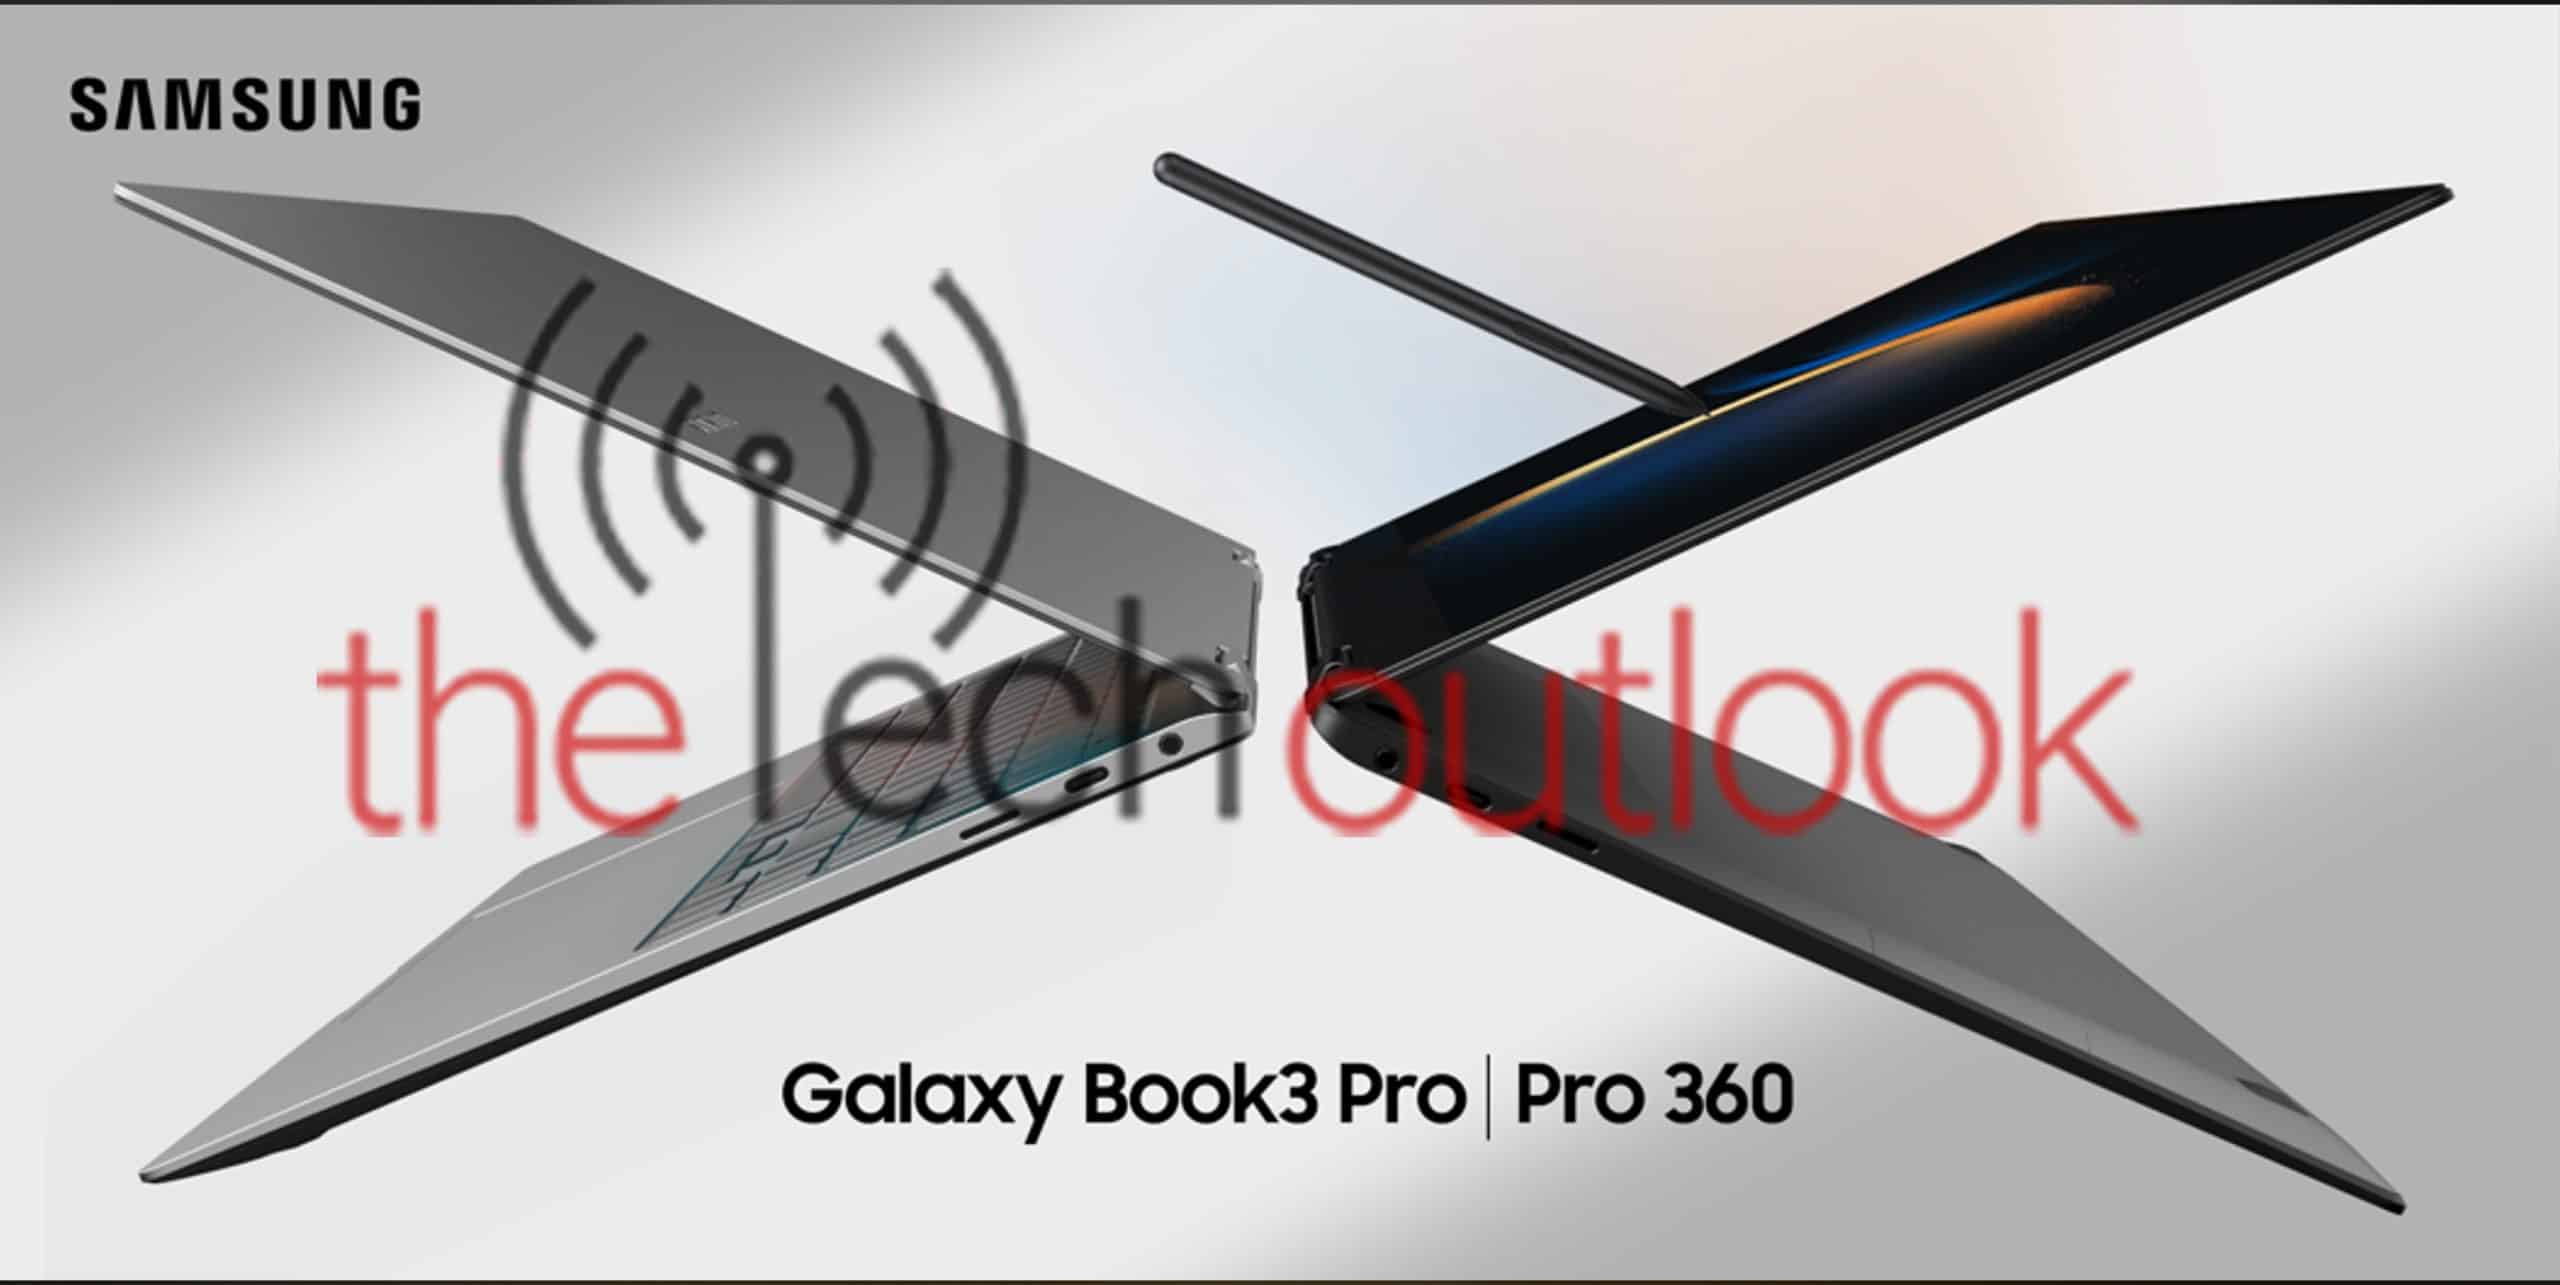 Samsung Galaxy Book 3 Pro Series